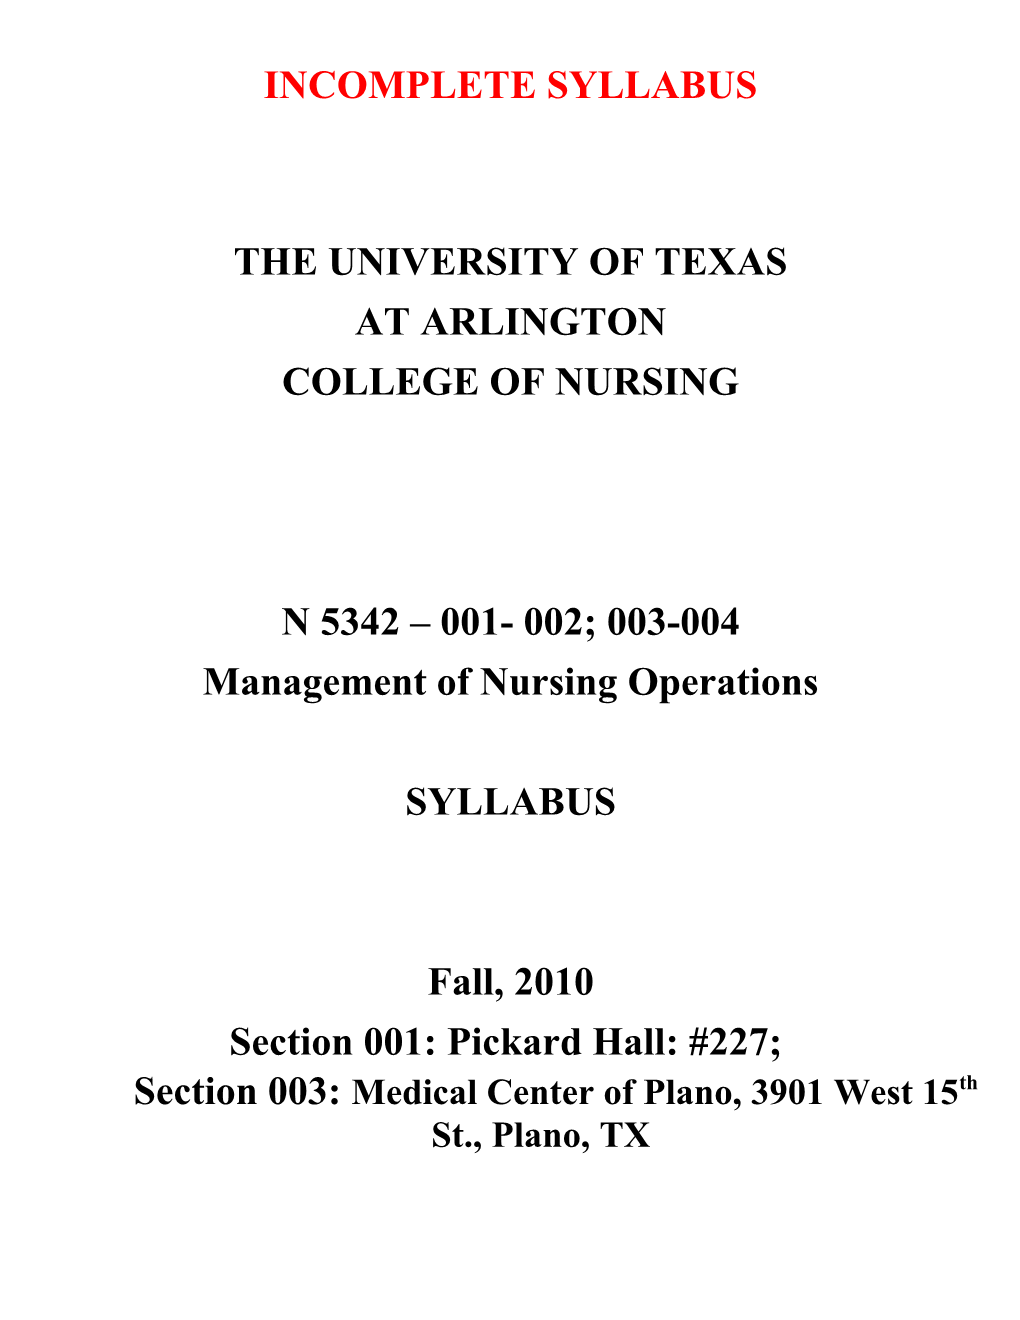 The University Of Texas At Arlington School Of Nursing